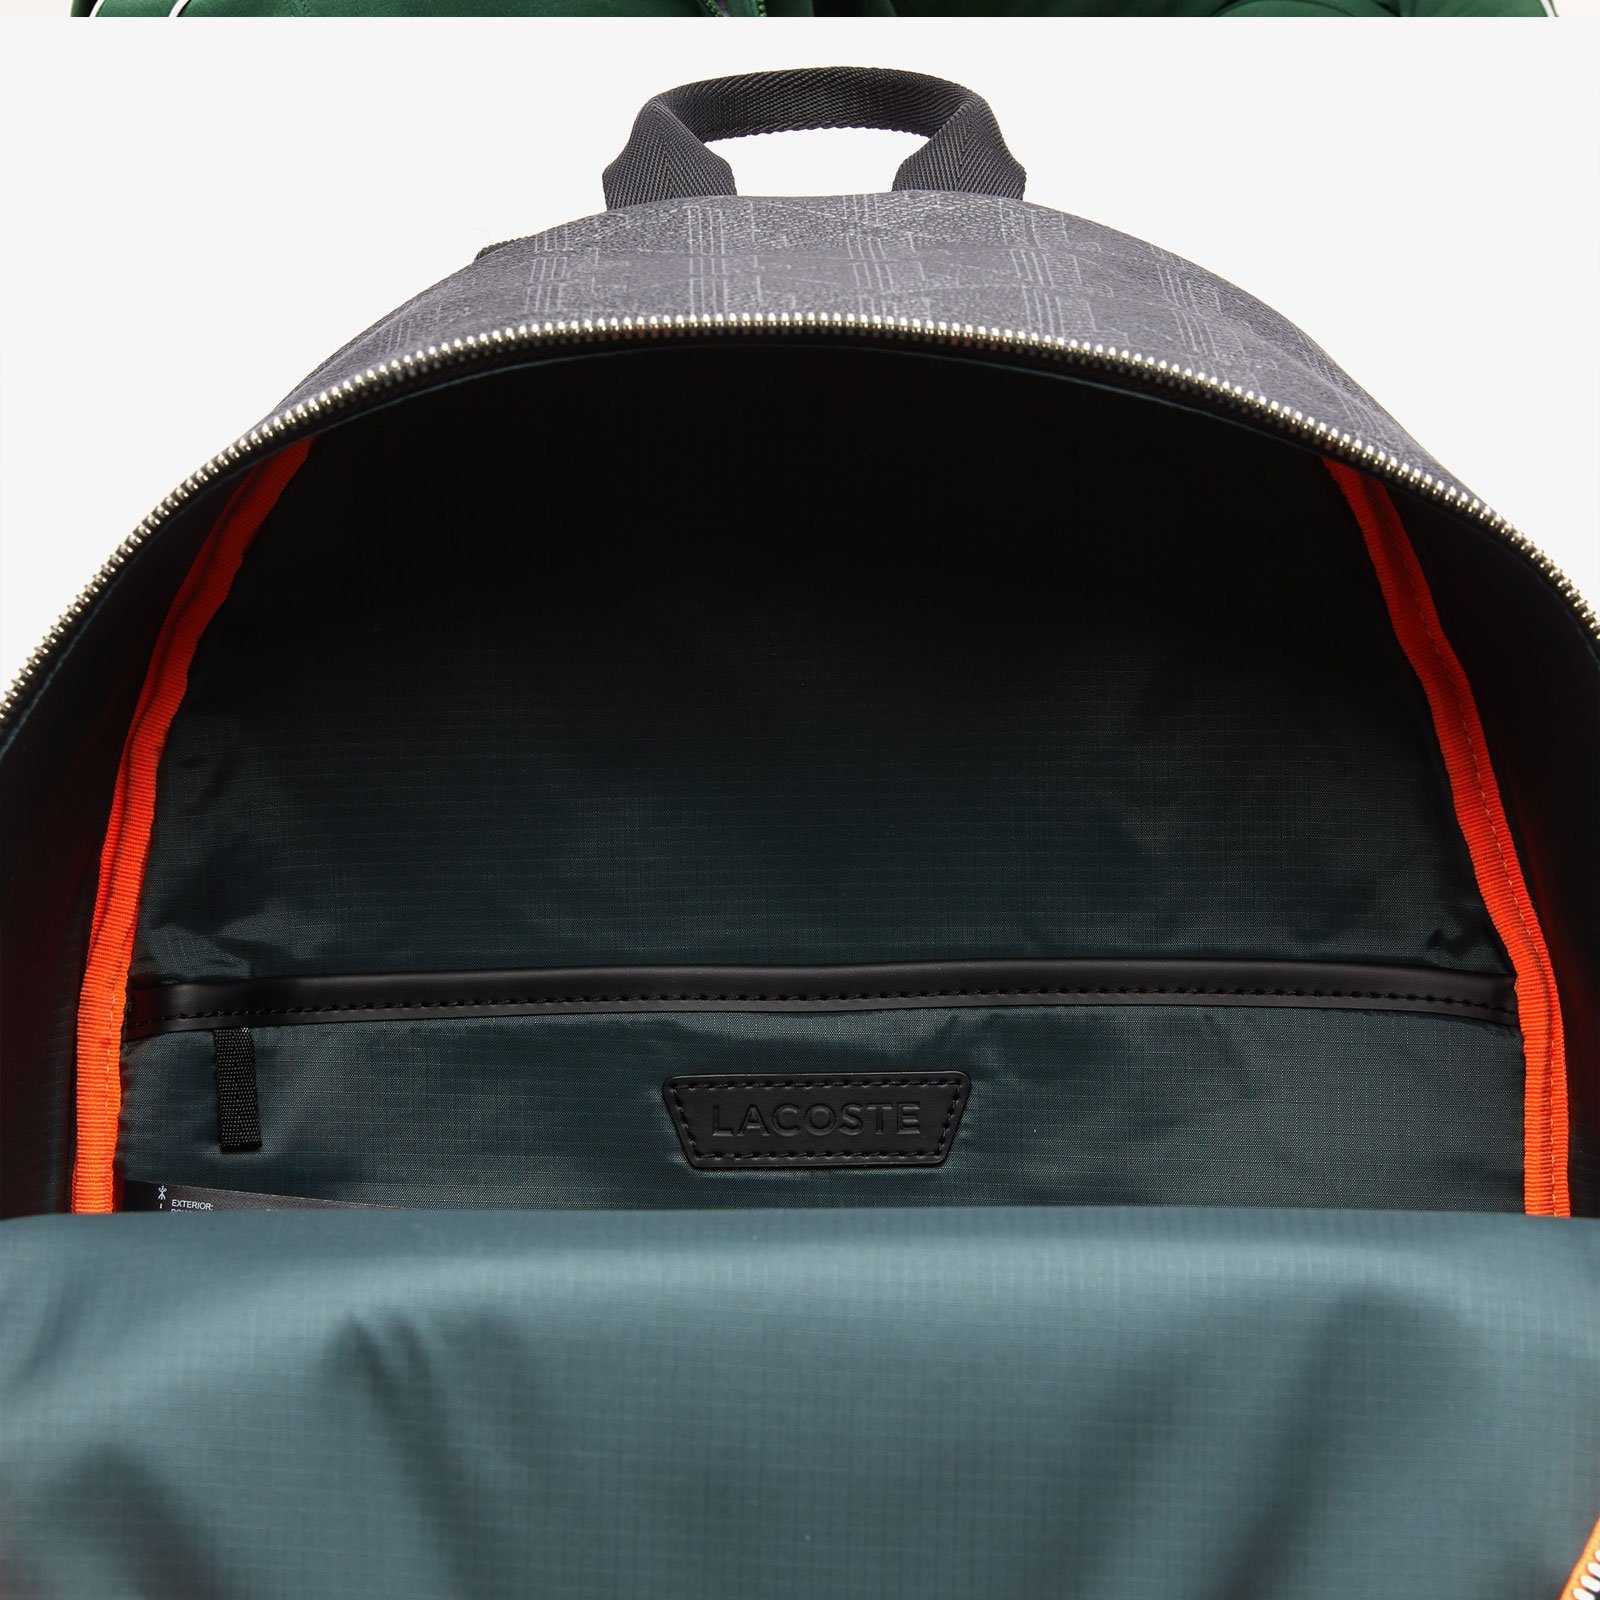 Lacoste Rucksack Backpack, mit Laptopfach